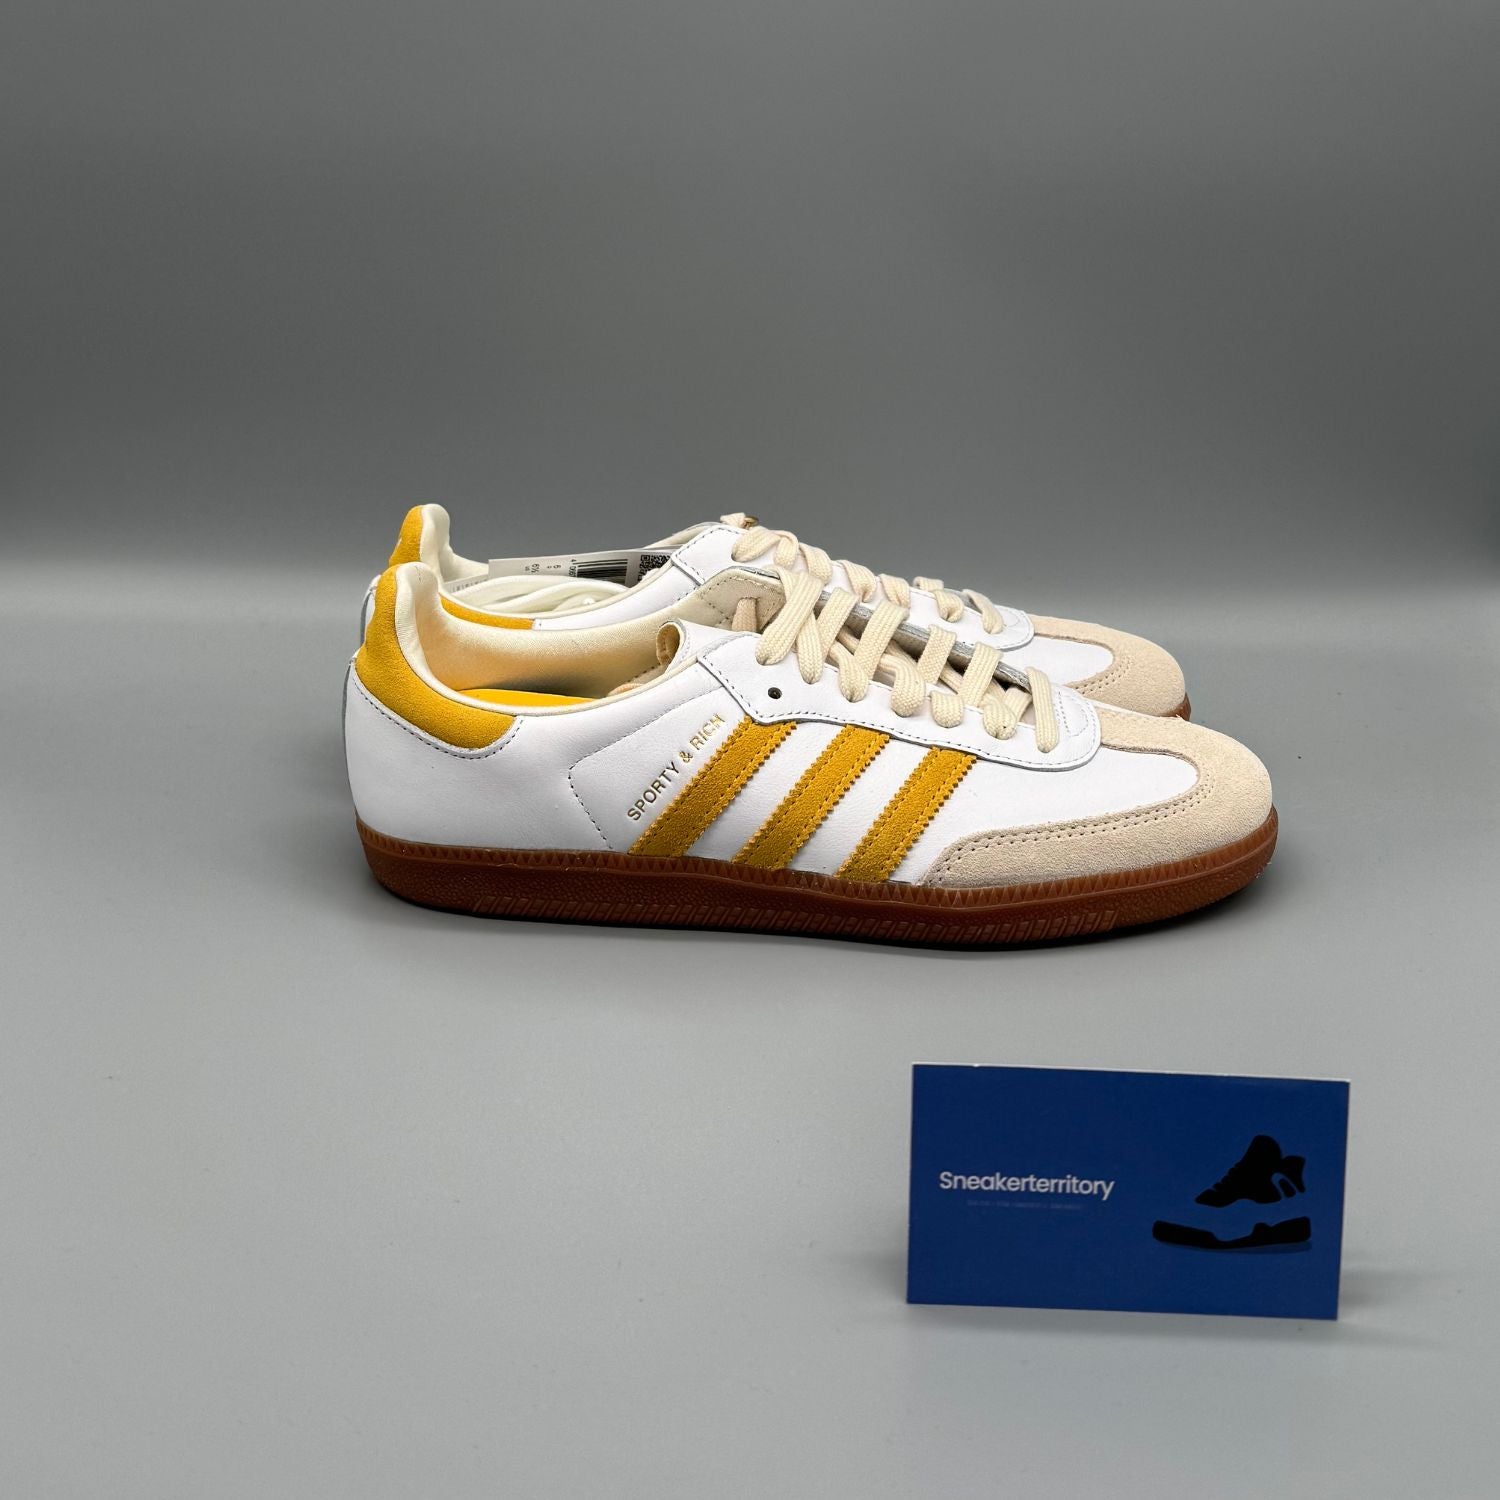 Adidas Samba Sporty & Rich White Collegiate Burgundy - Sneakerterritory; Sneaker Territory 2